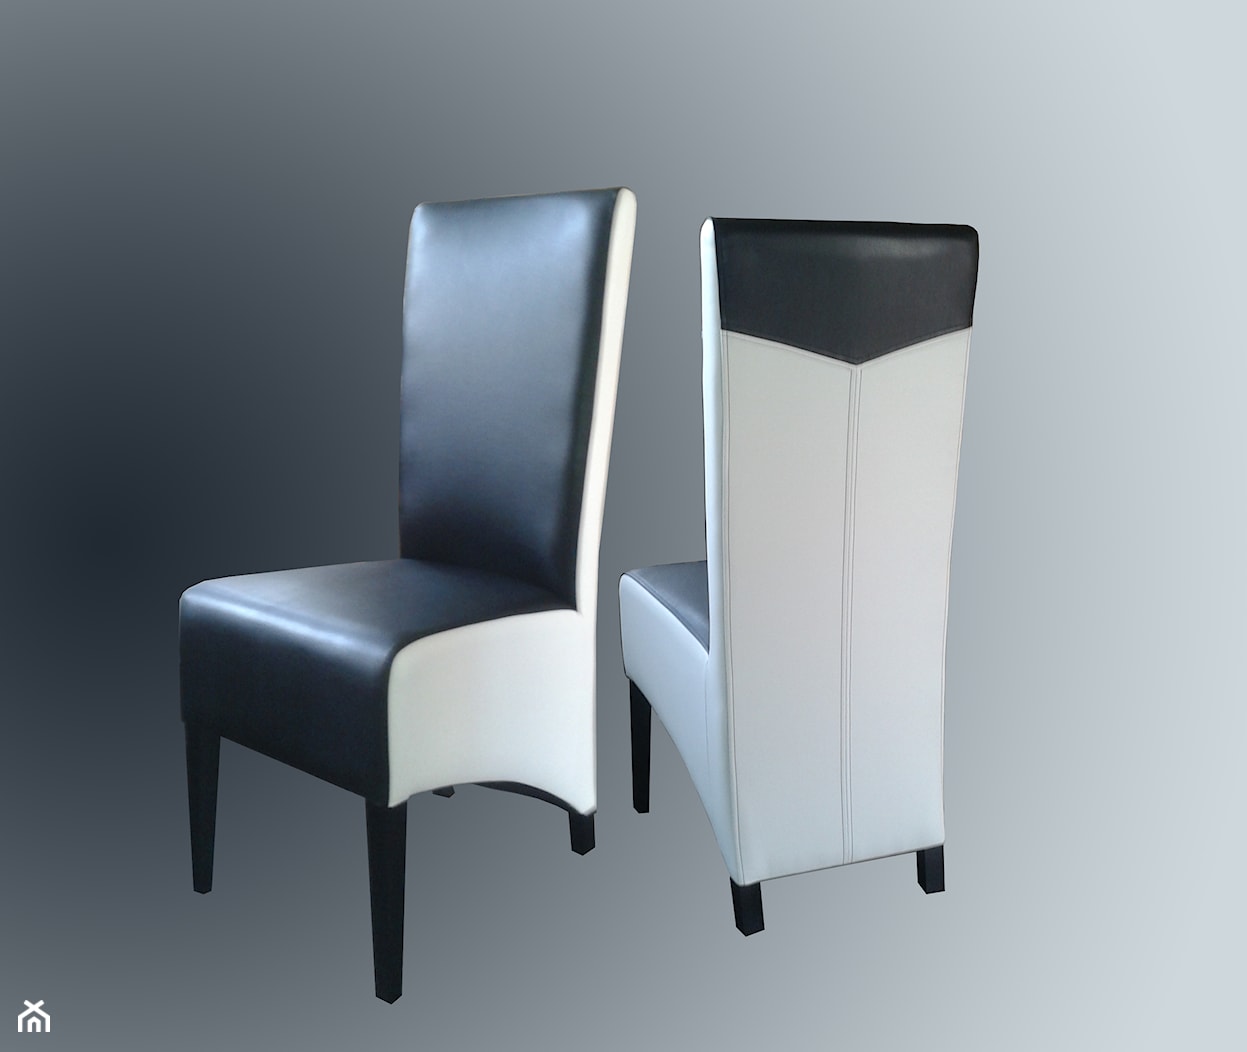 Krzesło verrucci - zdjęcie od marcello_meble1 - Homebook